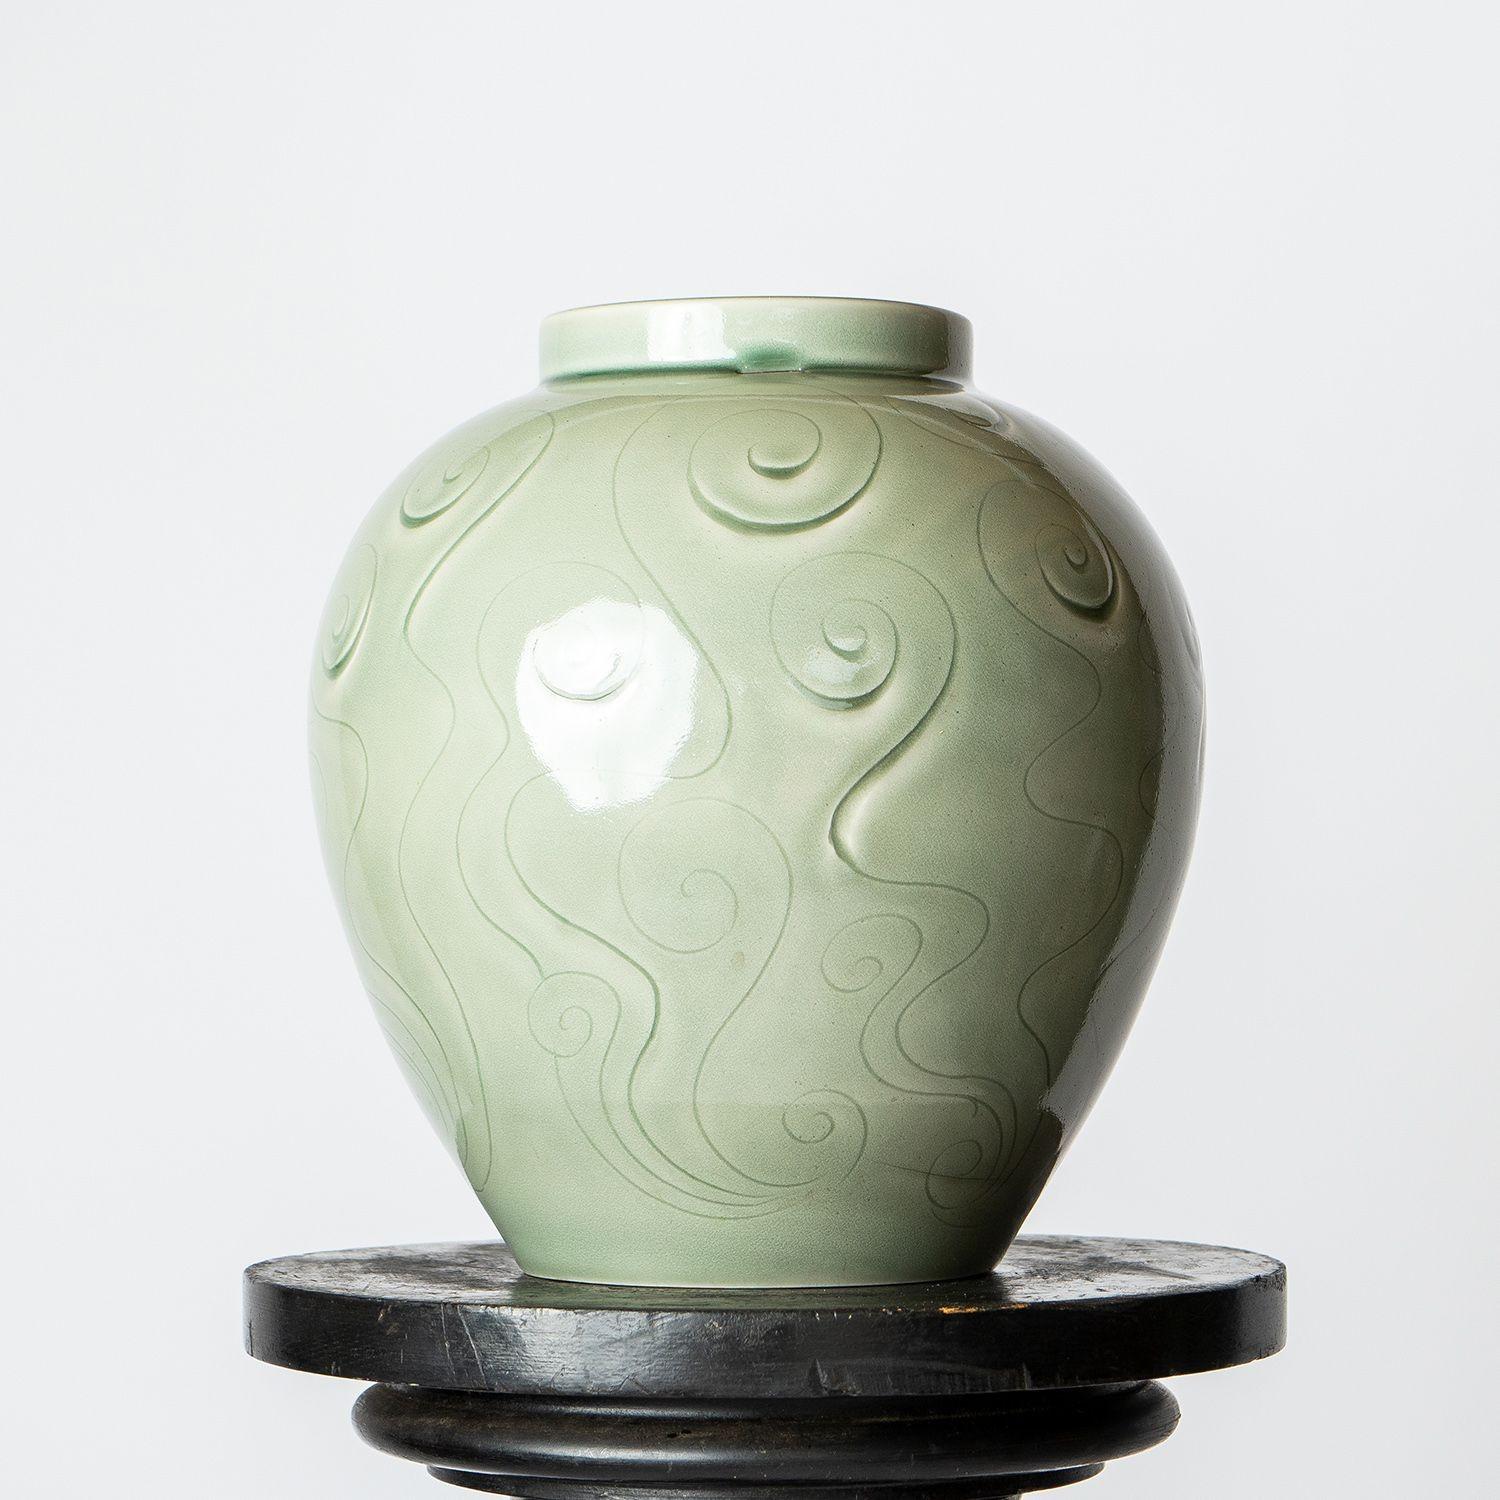 20th Century Large Vintage Celadon Vase by Agnete Hoy for Bullers Studio Pottery, c. 1940s